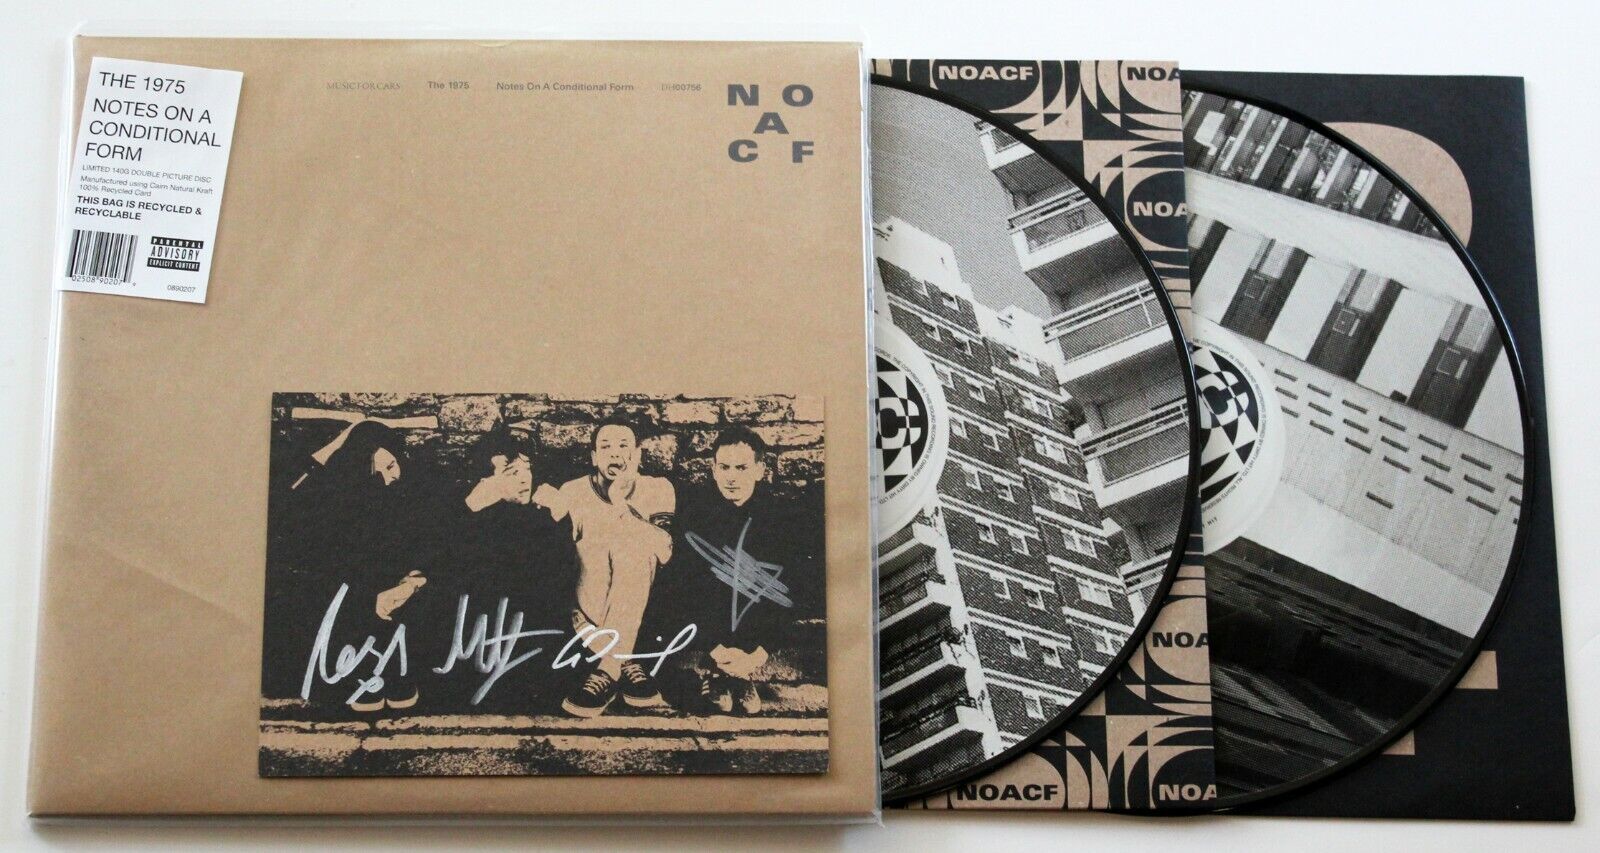 THE 1975 BAND SIGNED NOACF ART CARD & LP PICTURE DISC VINYL RECORD AUTOGRAPH COA